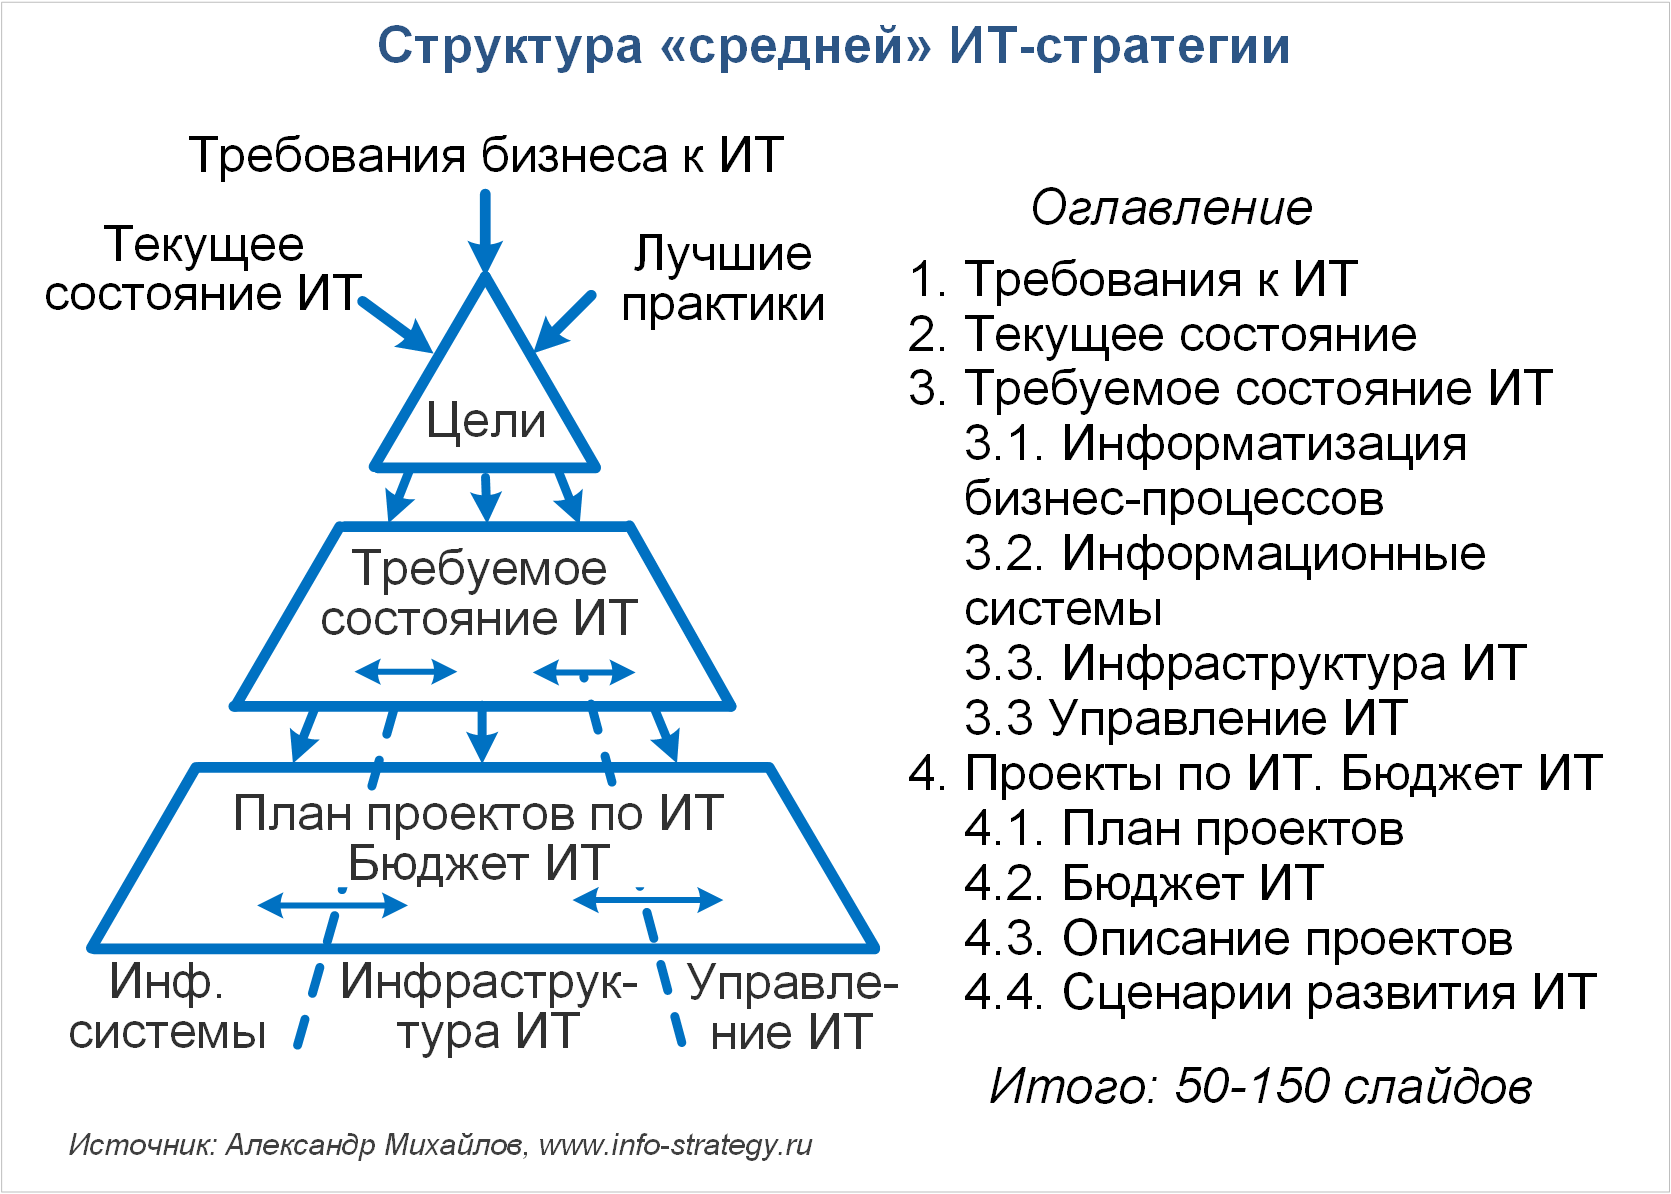 Структура «средней» ИТ-стратегии Источник: Александр Михайлов, сайт www.info-strategy.ru